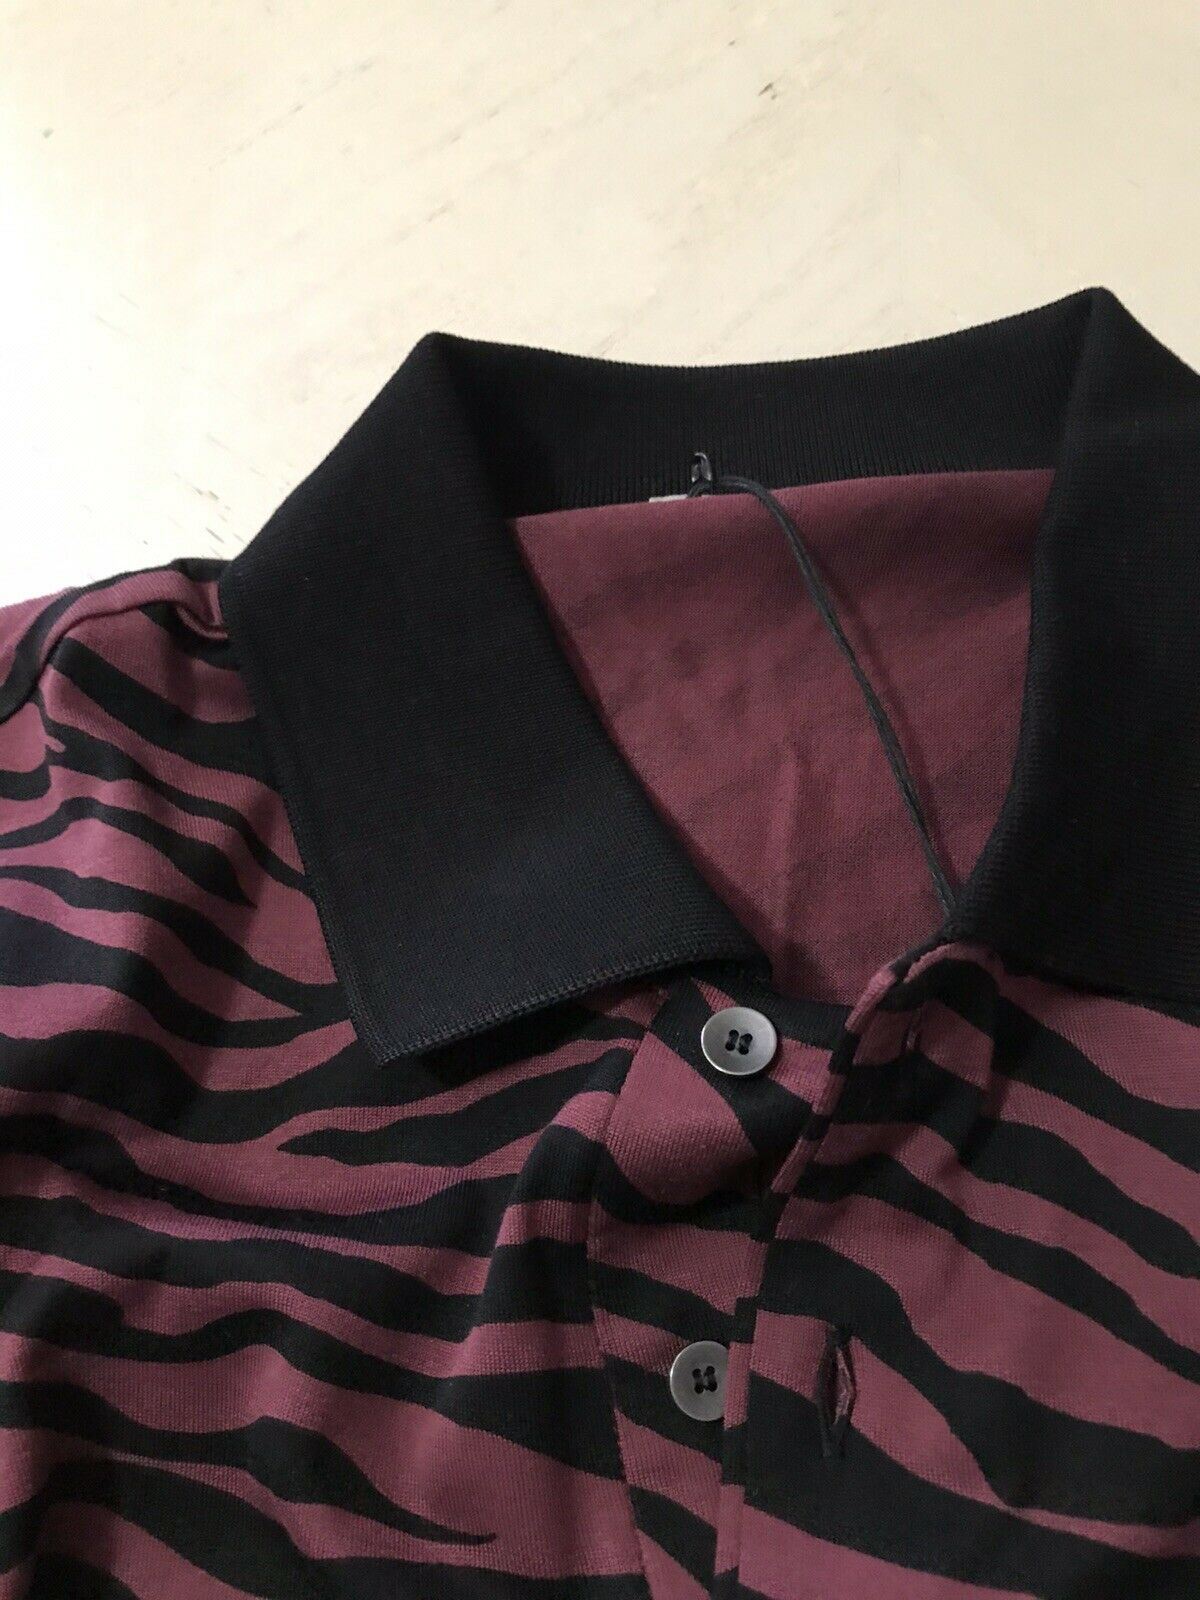 NWT $590 Bottega Veneta Mens Polo Shirt Black/Burgundy M US ( 50 Eu ) Italy